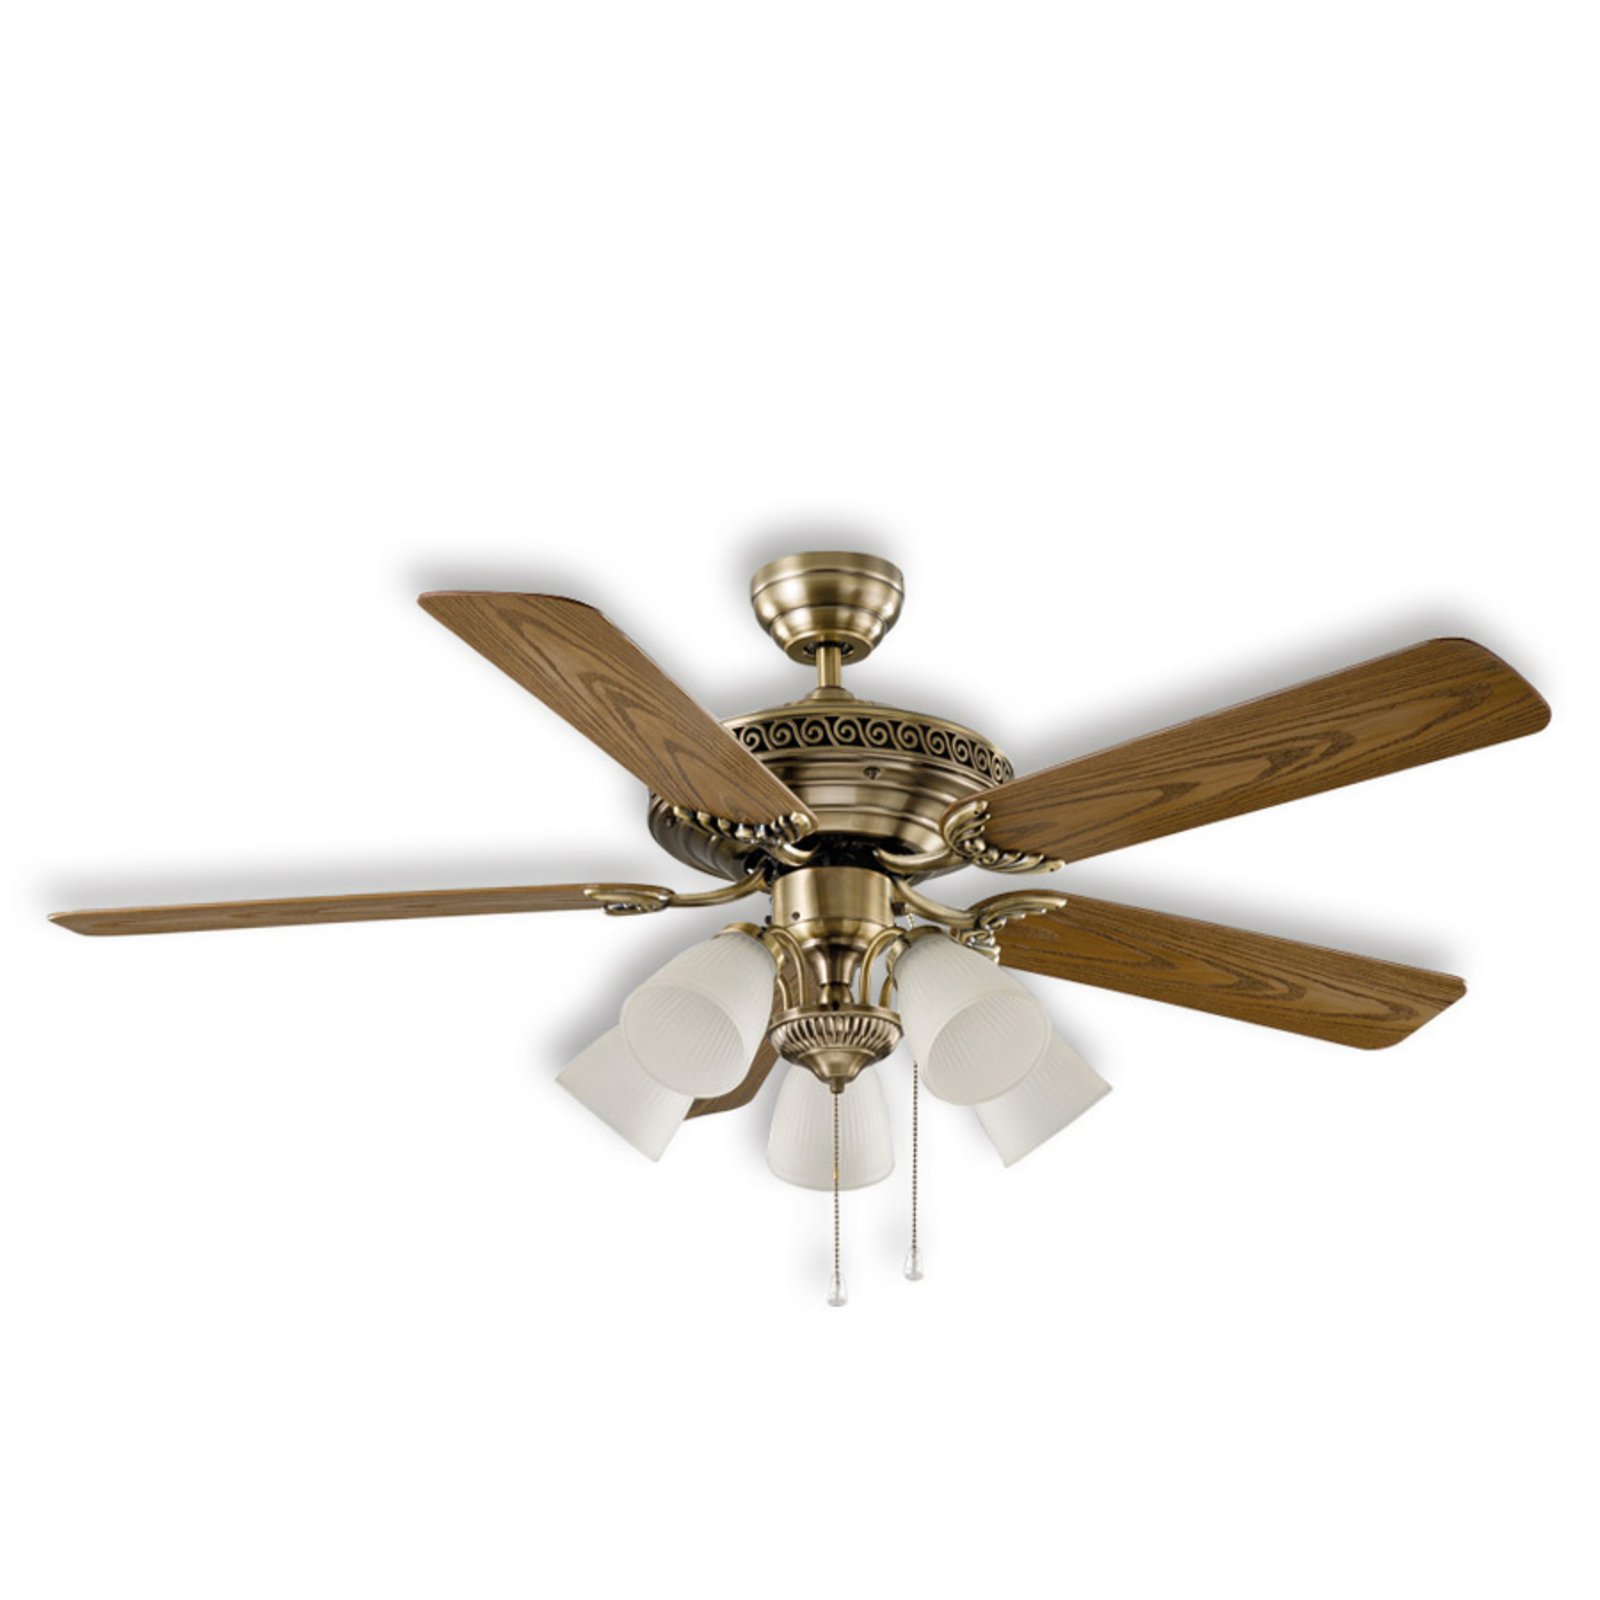 Centurion ceiling fan, antique brass